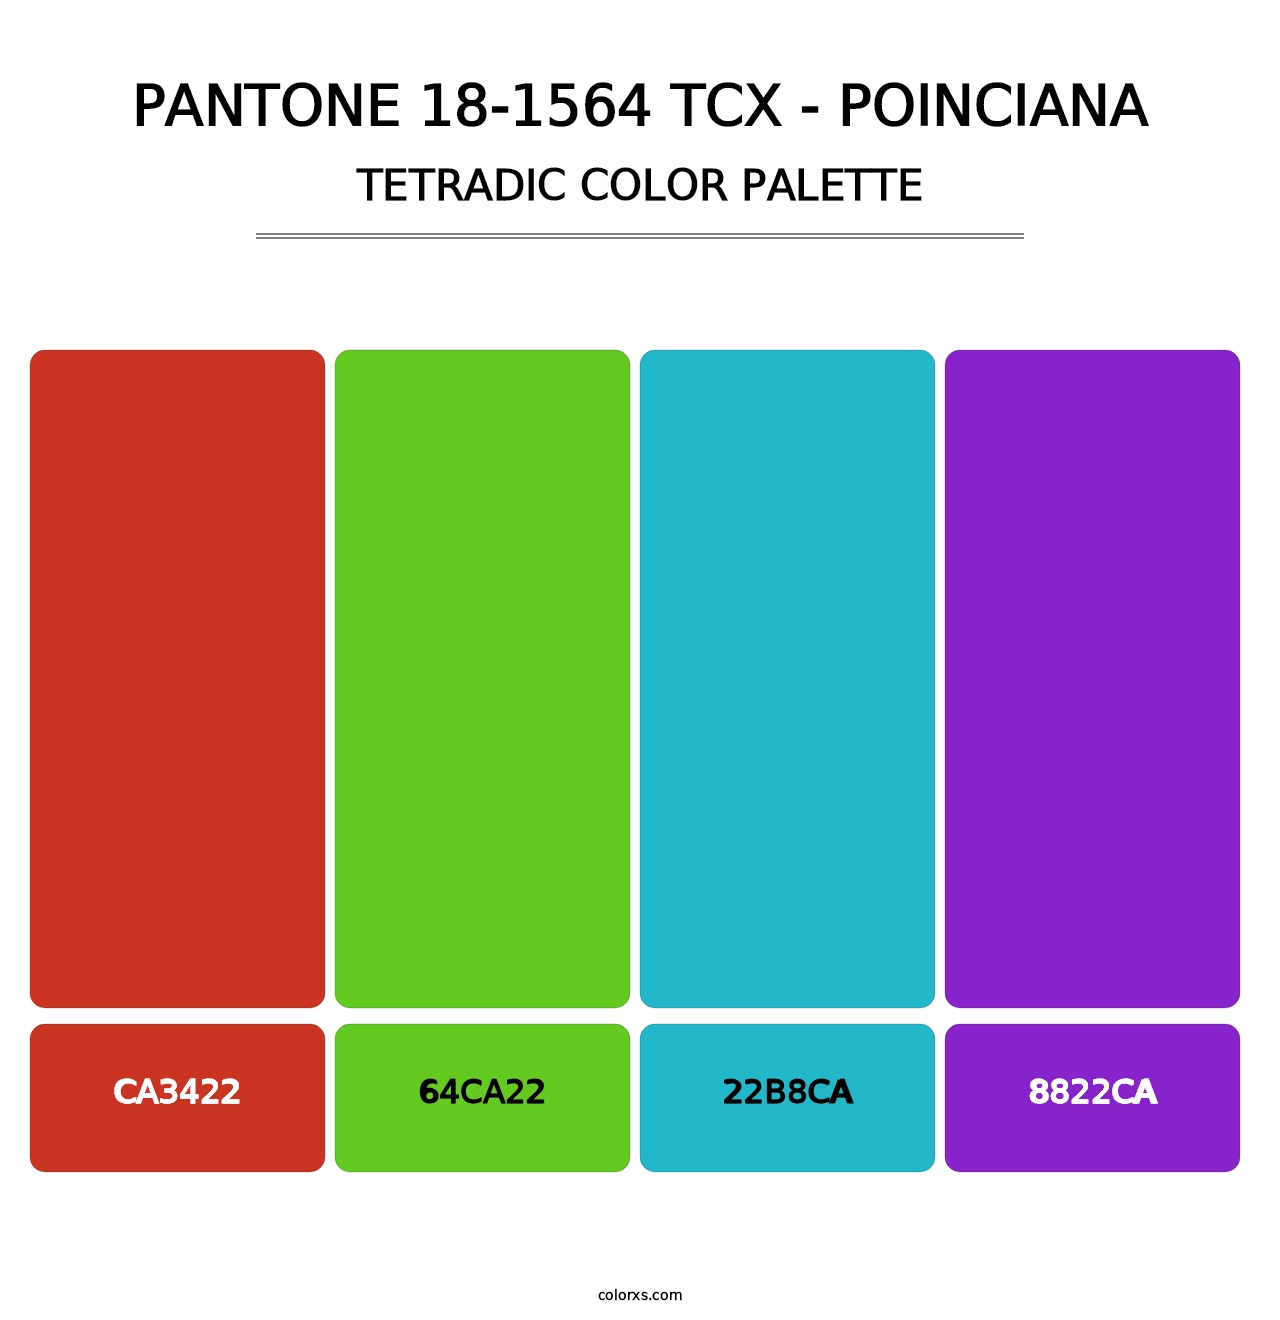 PANTONE 18-1564 TCX - Poinciana - Tetradic Color Palette